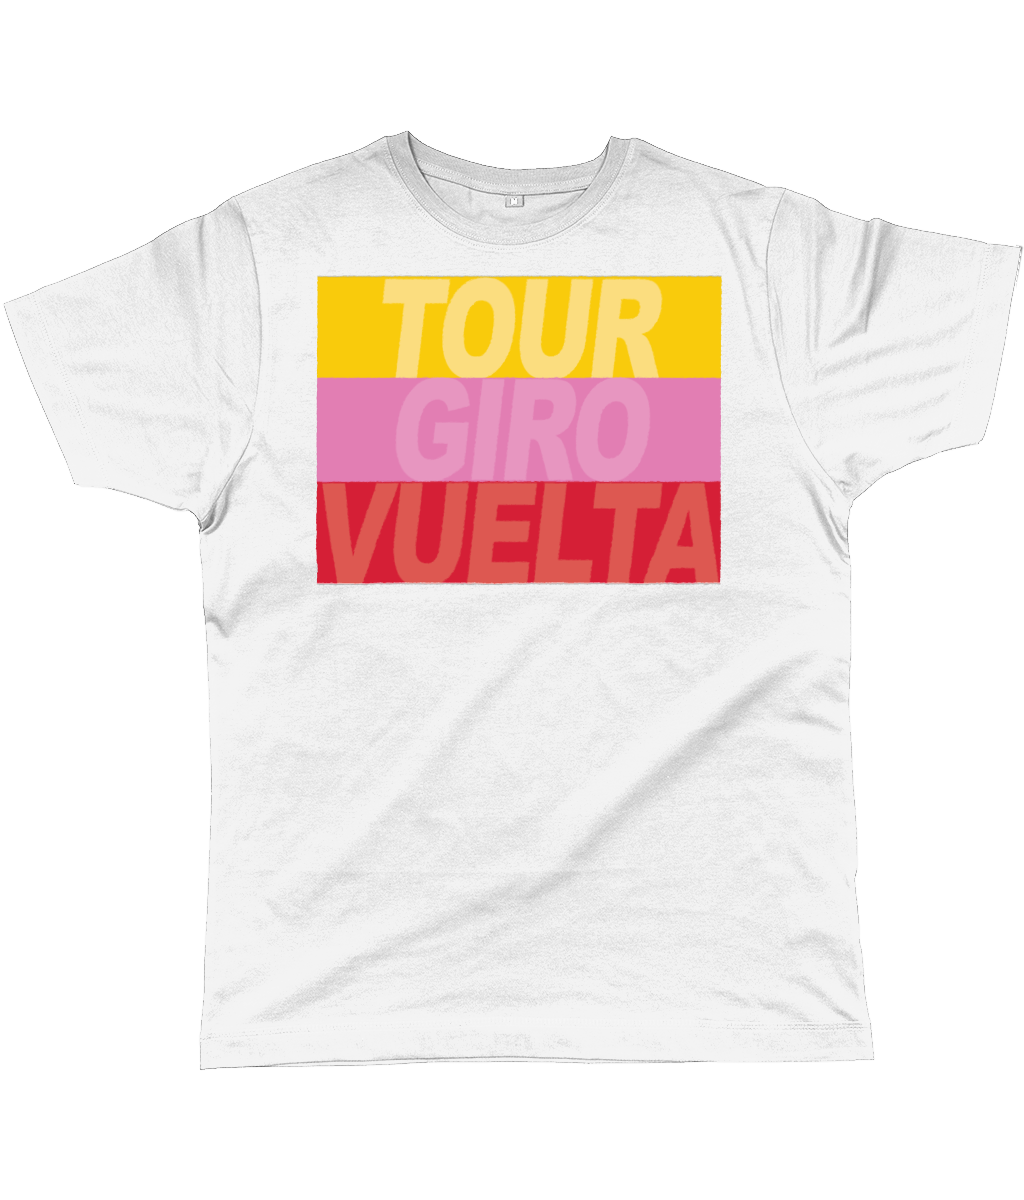 cycling t shirts